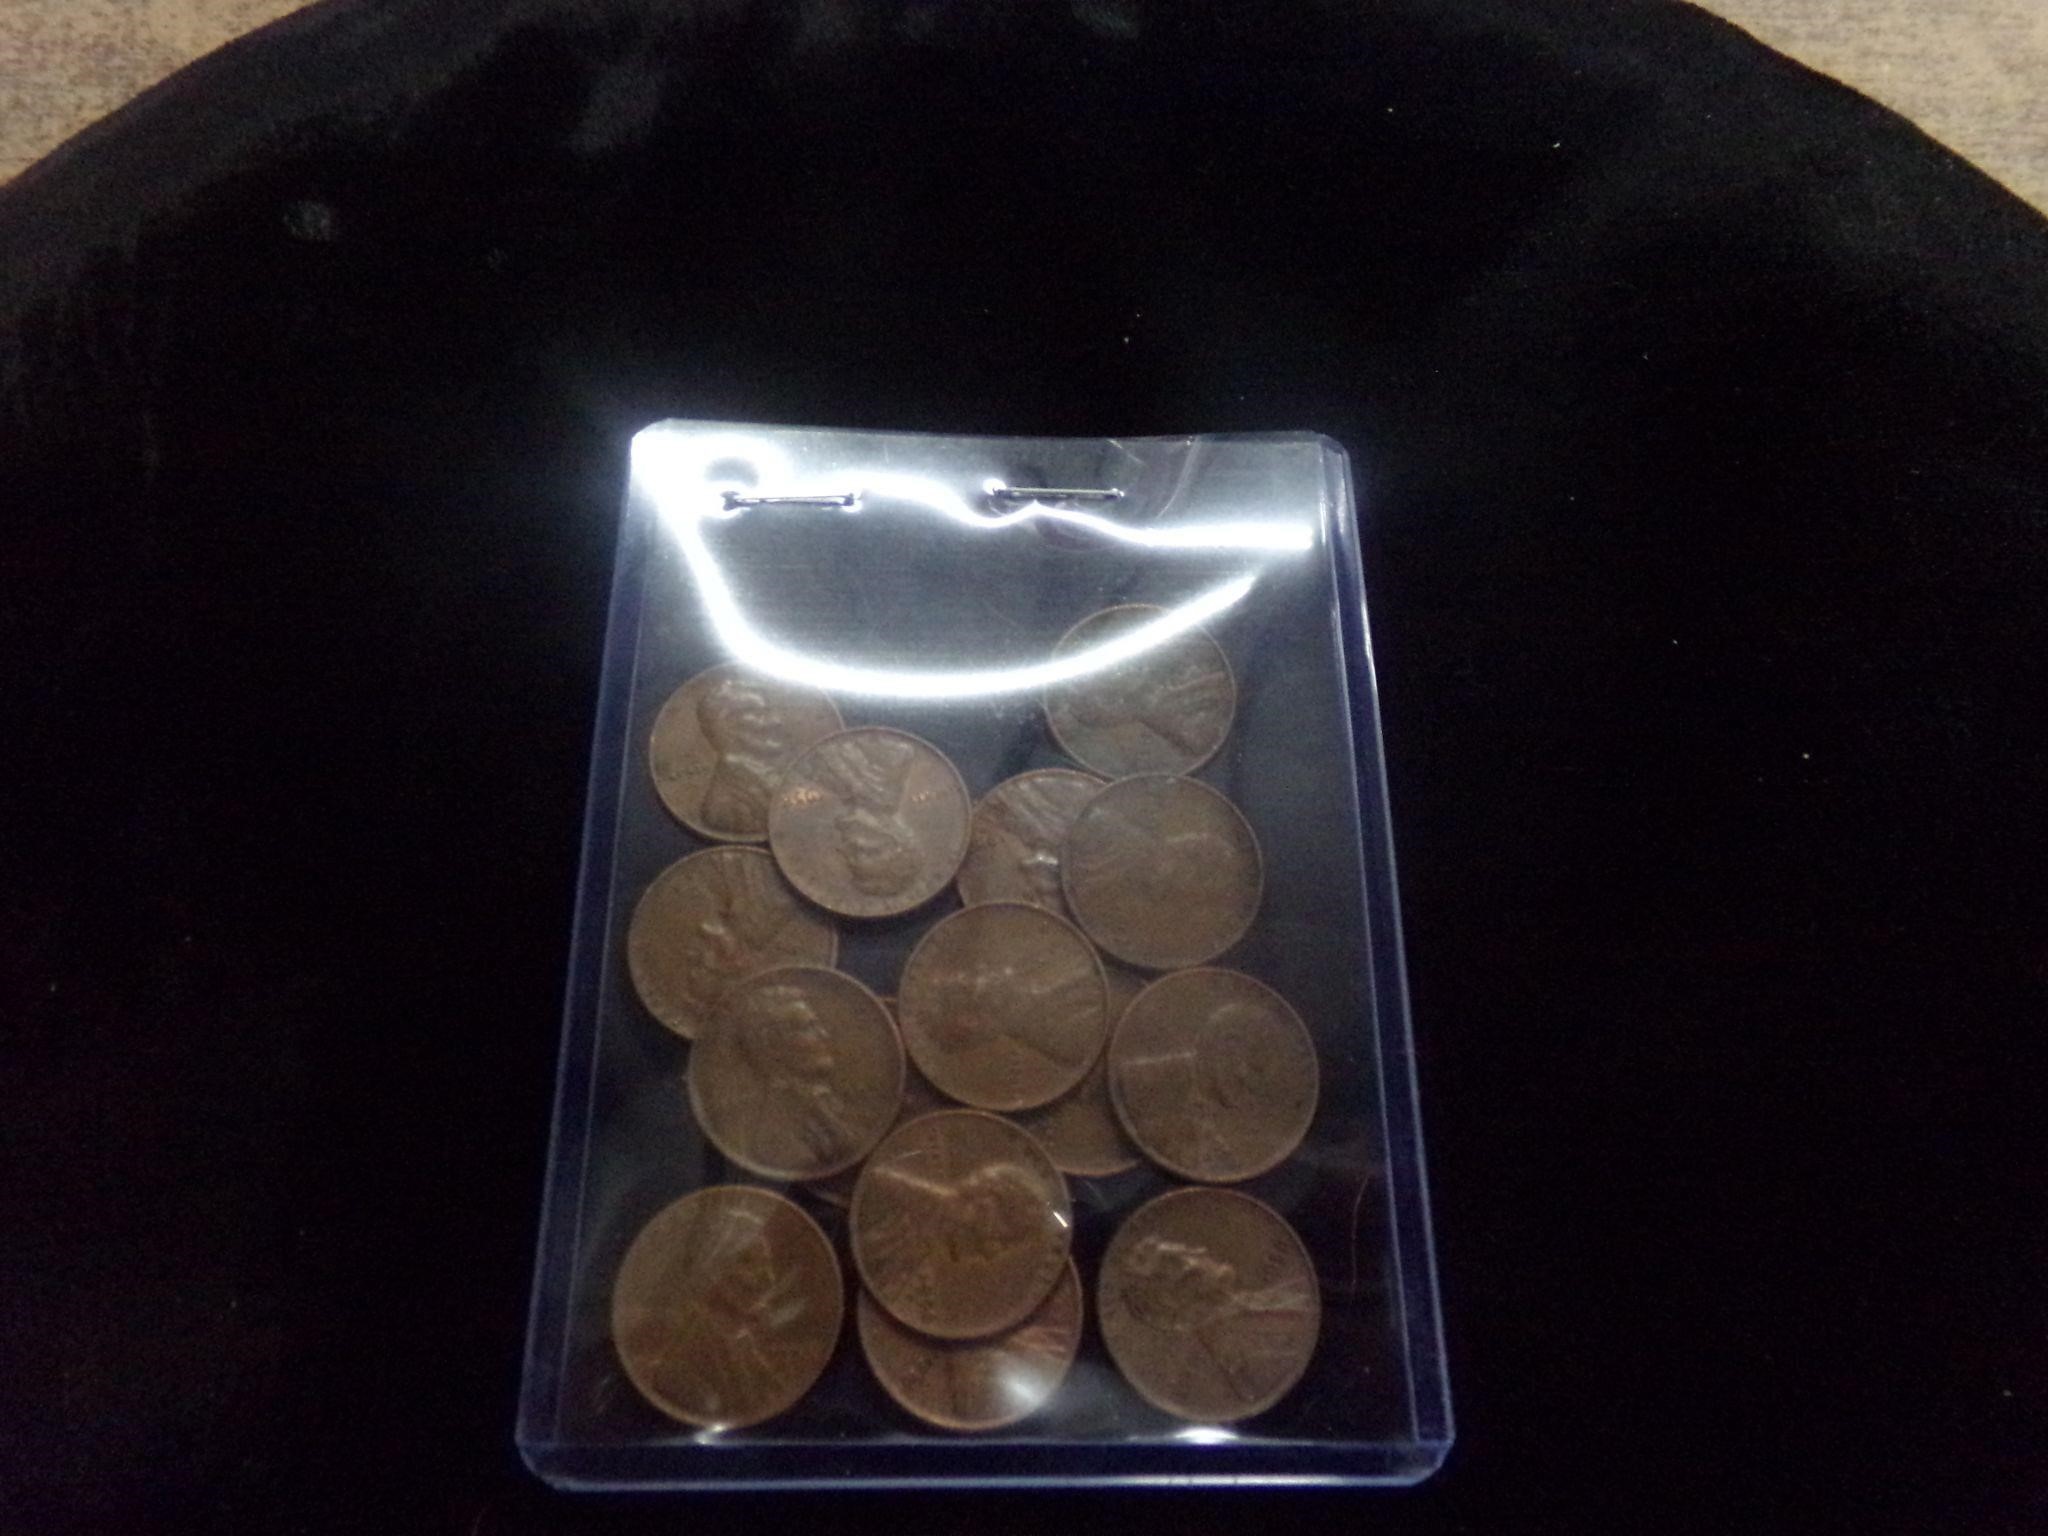 15 Wheat pennies